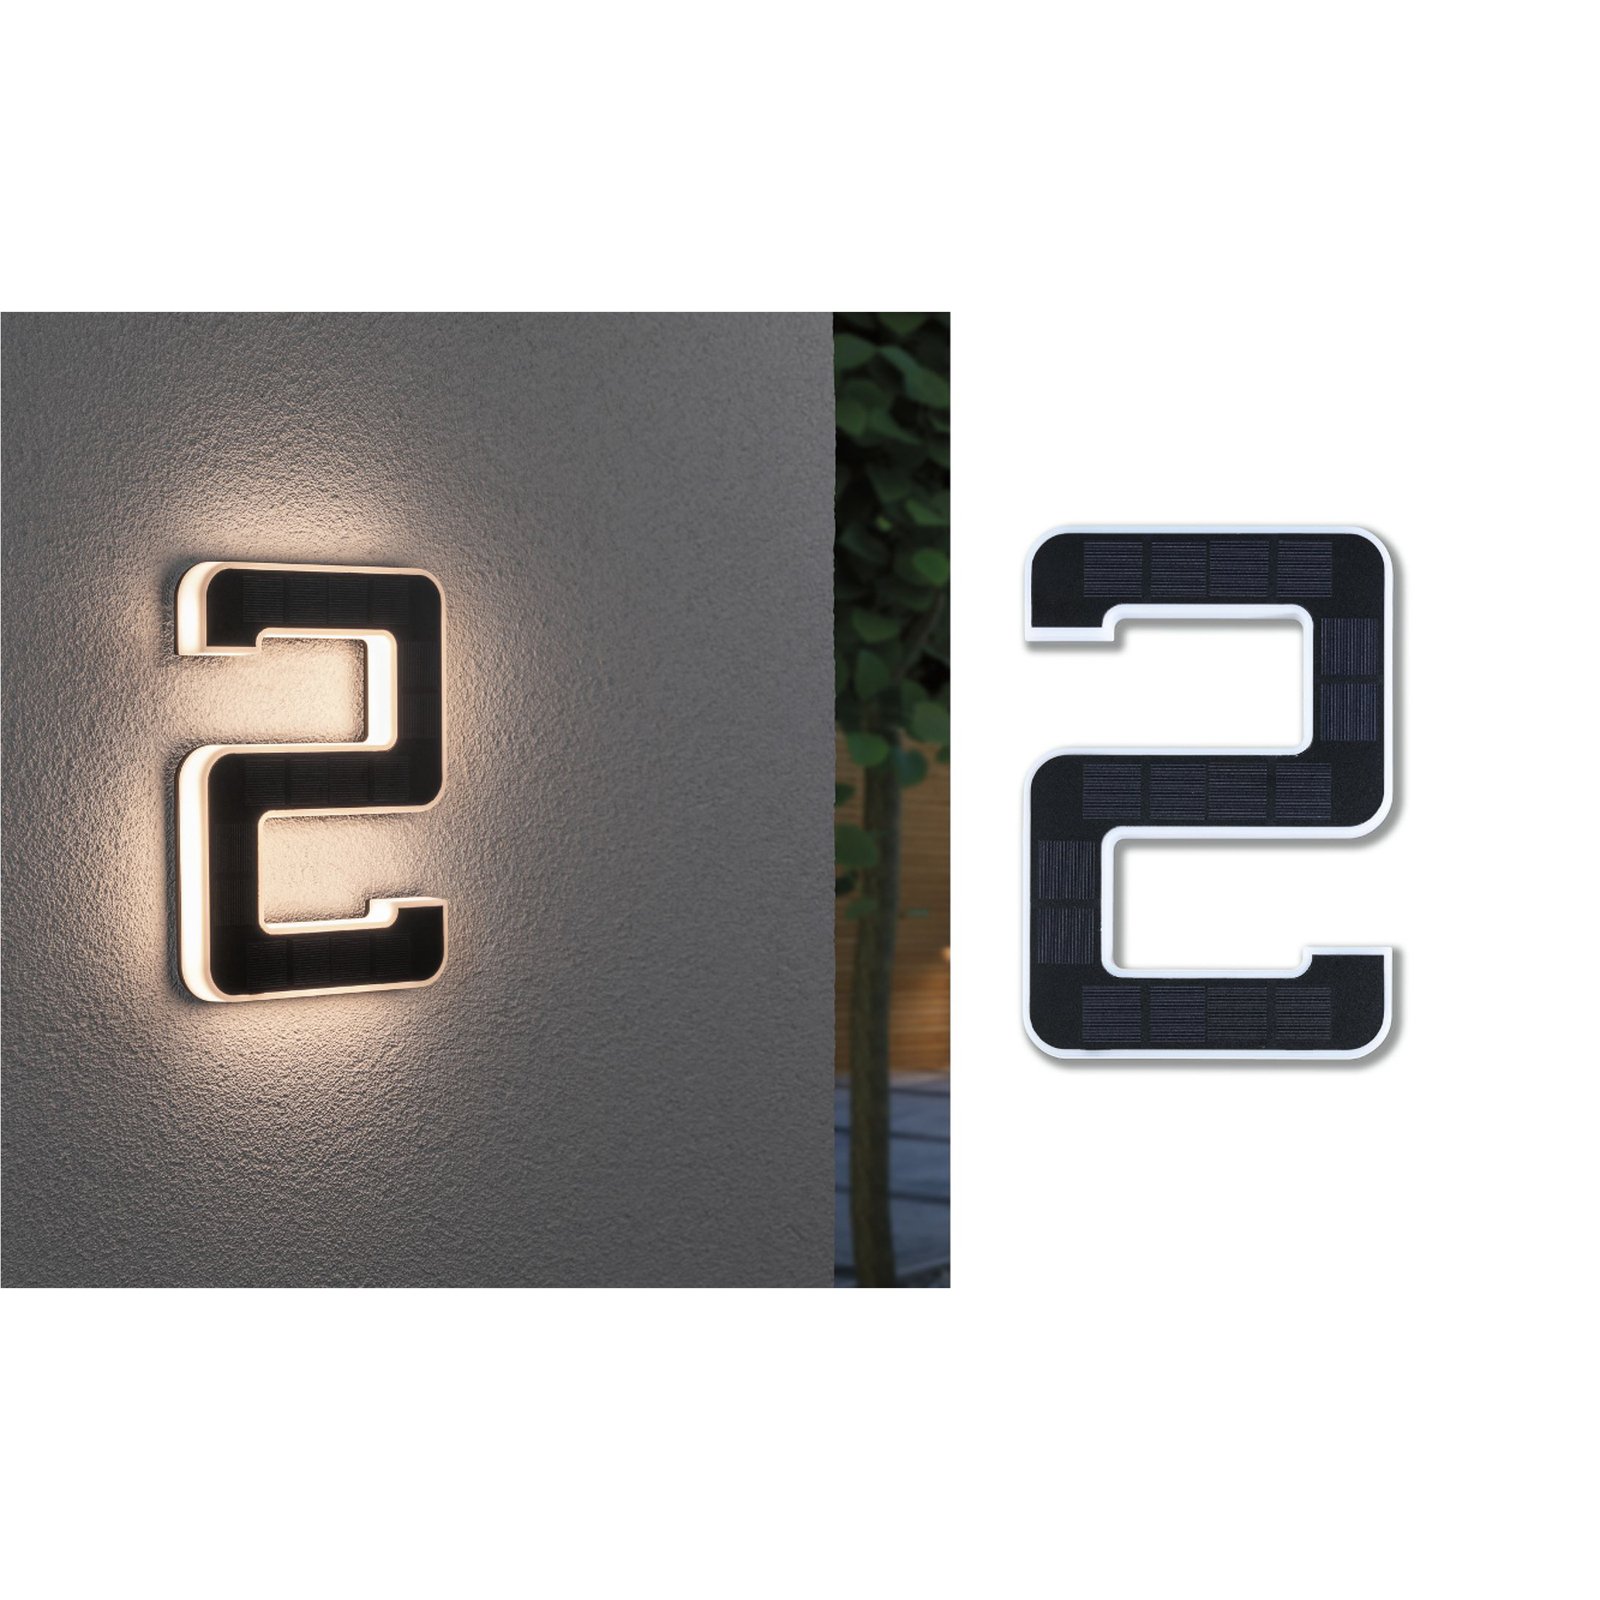 Paulmann LED solární číslo domu 2